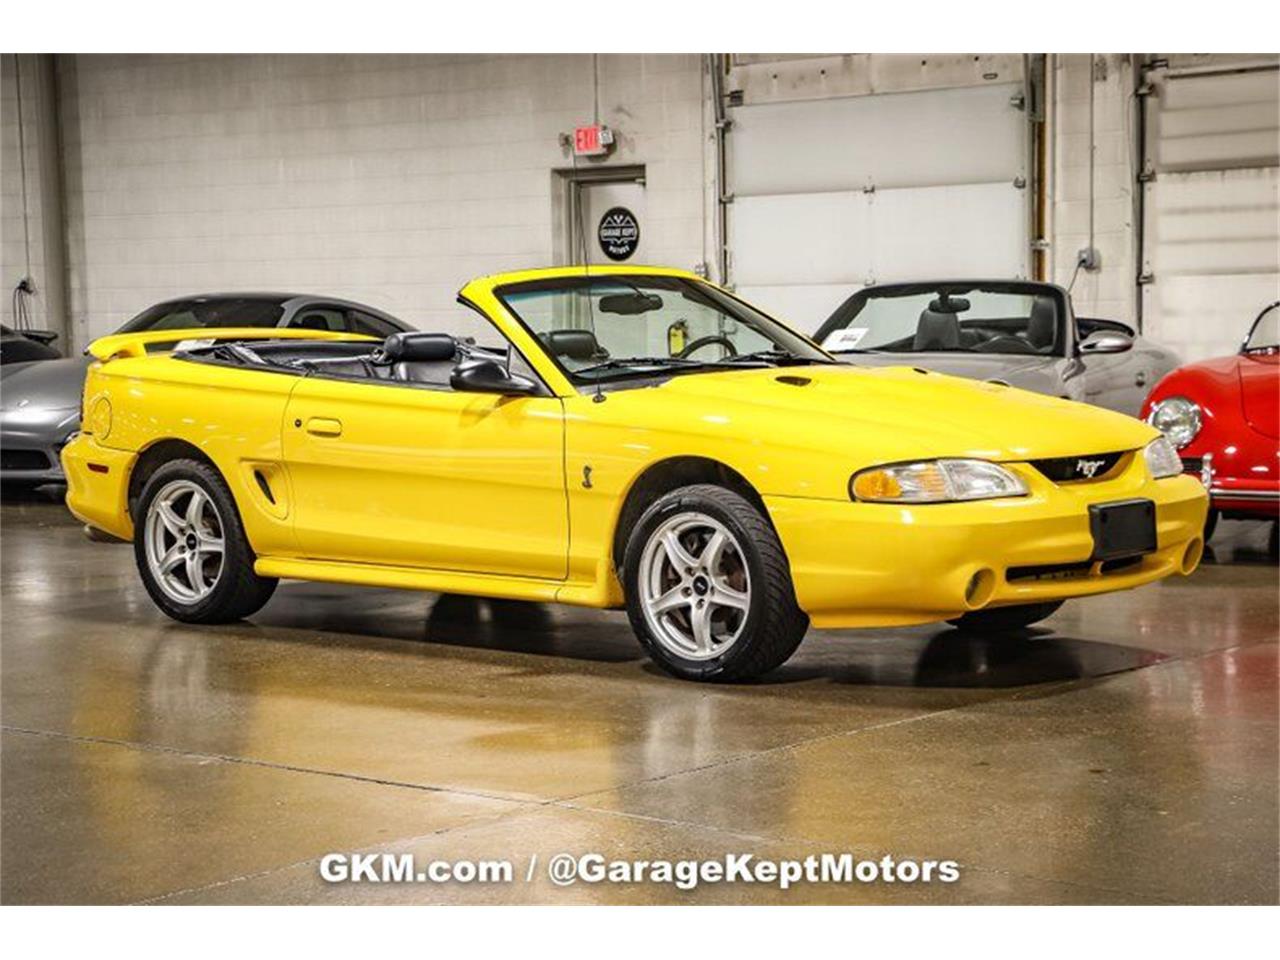 For Sale: 1998 Ford Mustang SVT Cobra in Grand Rapids, Michigan for sale in Grand Rapids, MI